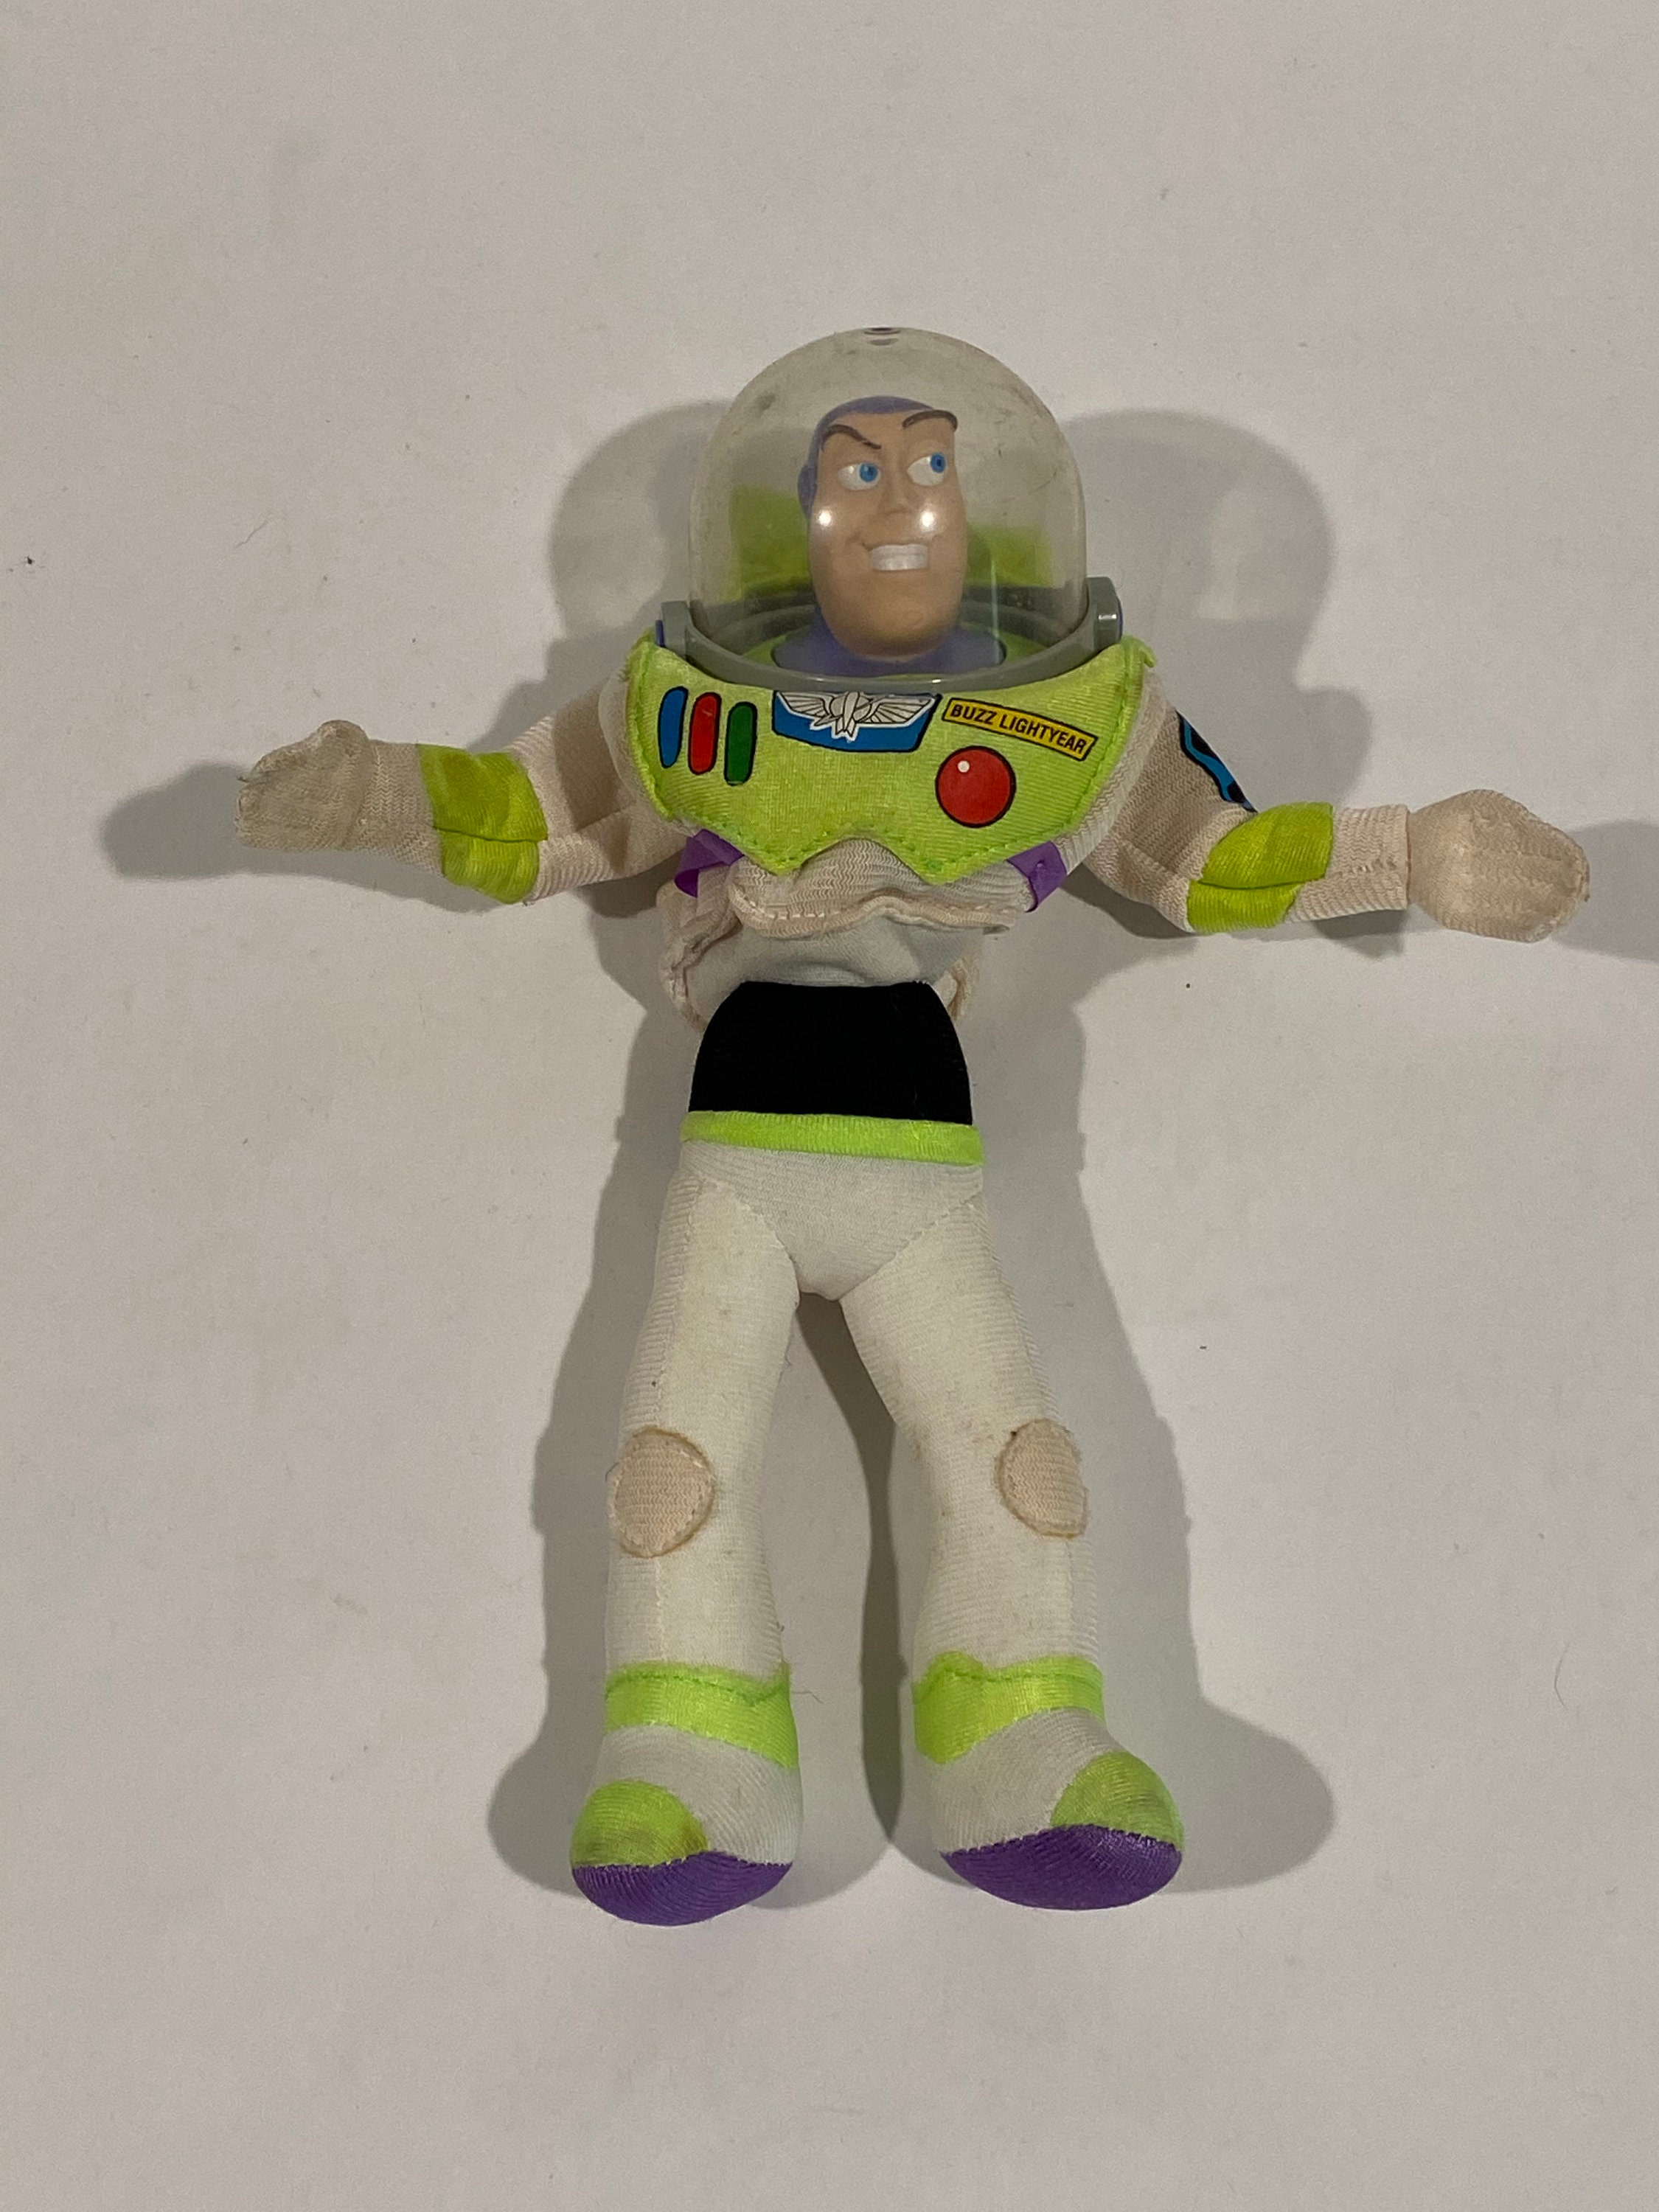 23 Toy Story 3 Buzz Light Year bonnie Plush 